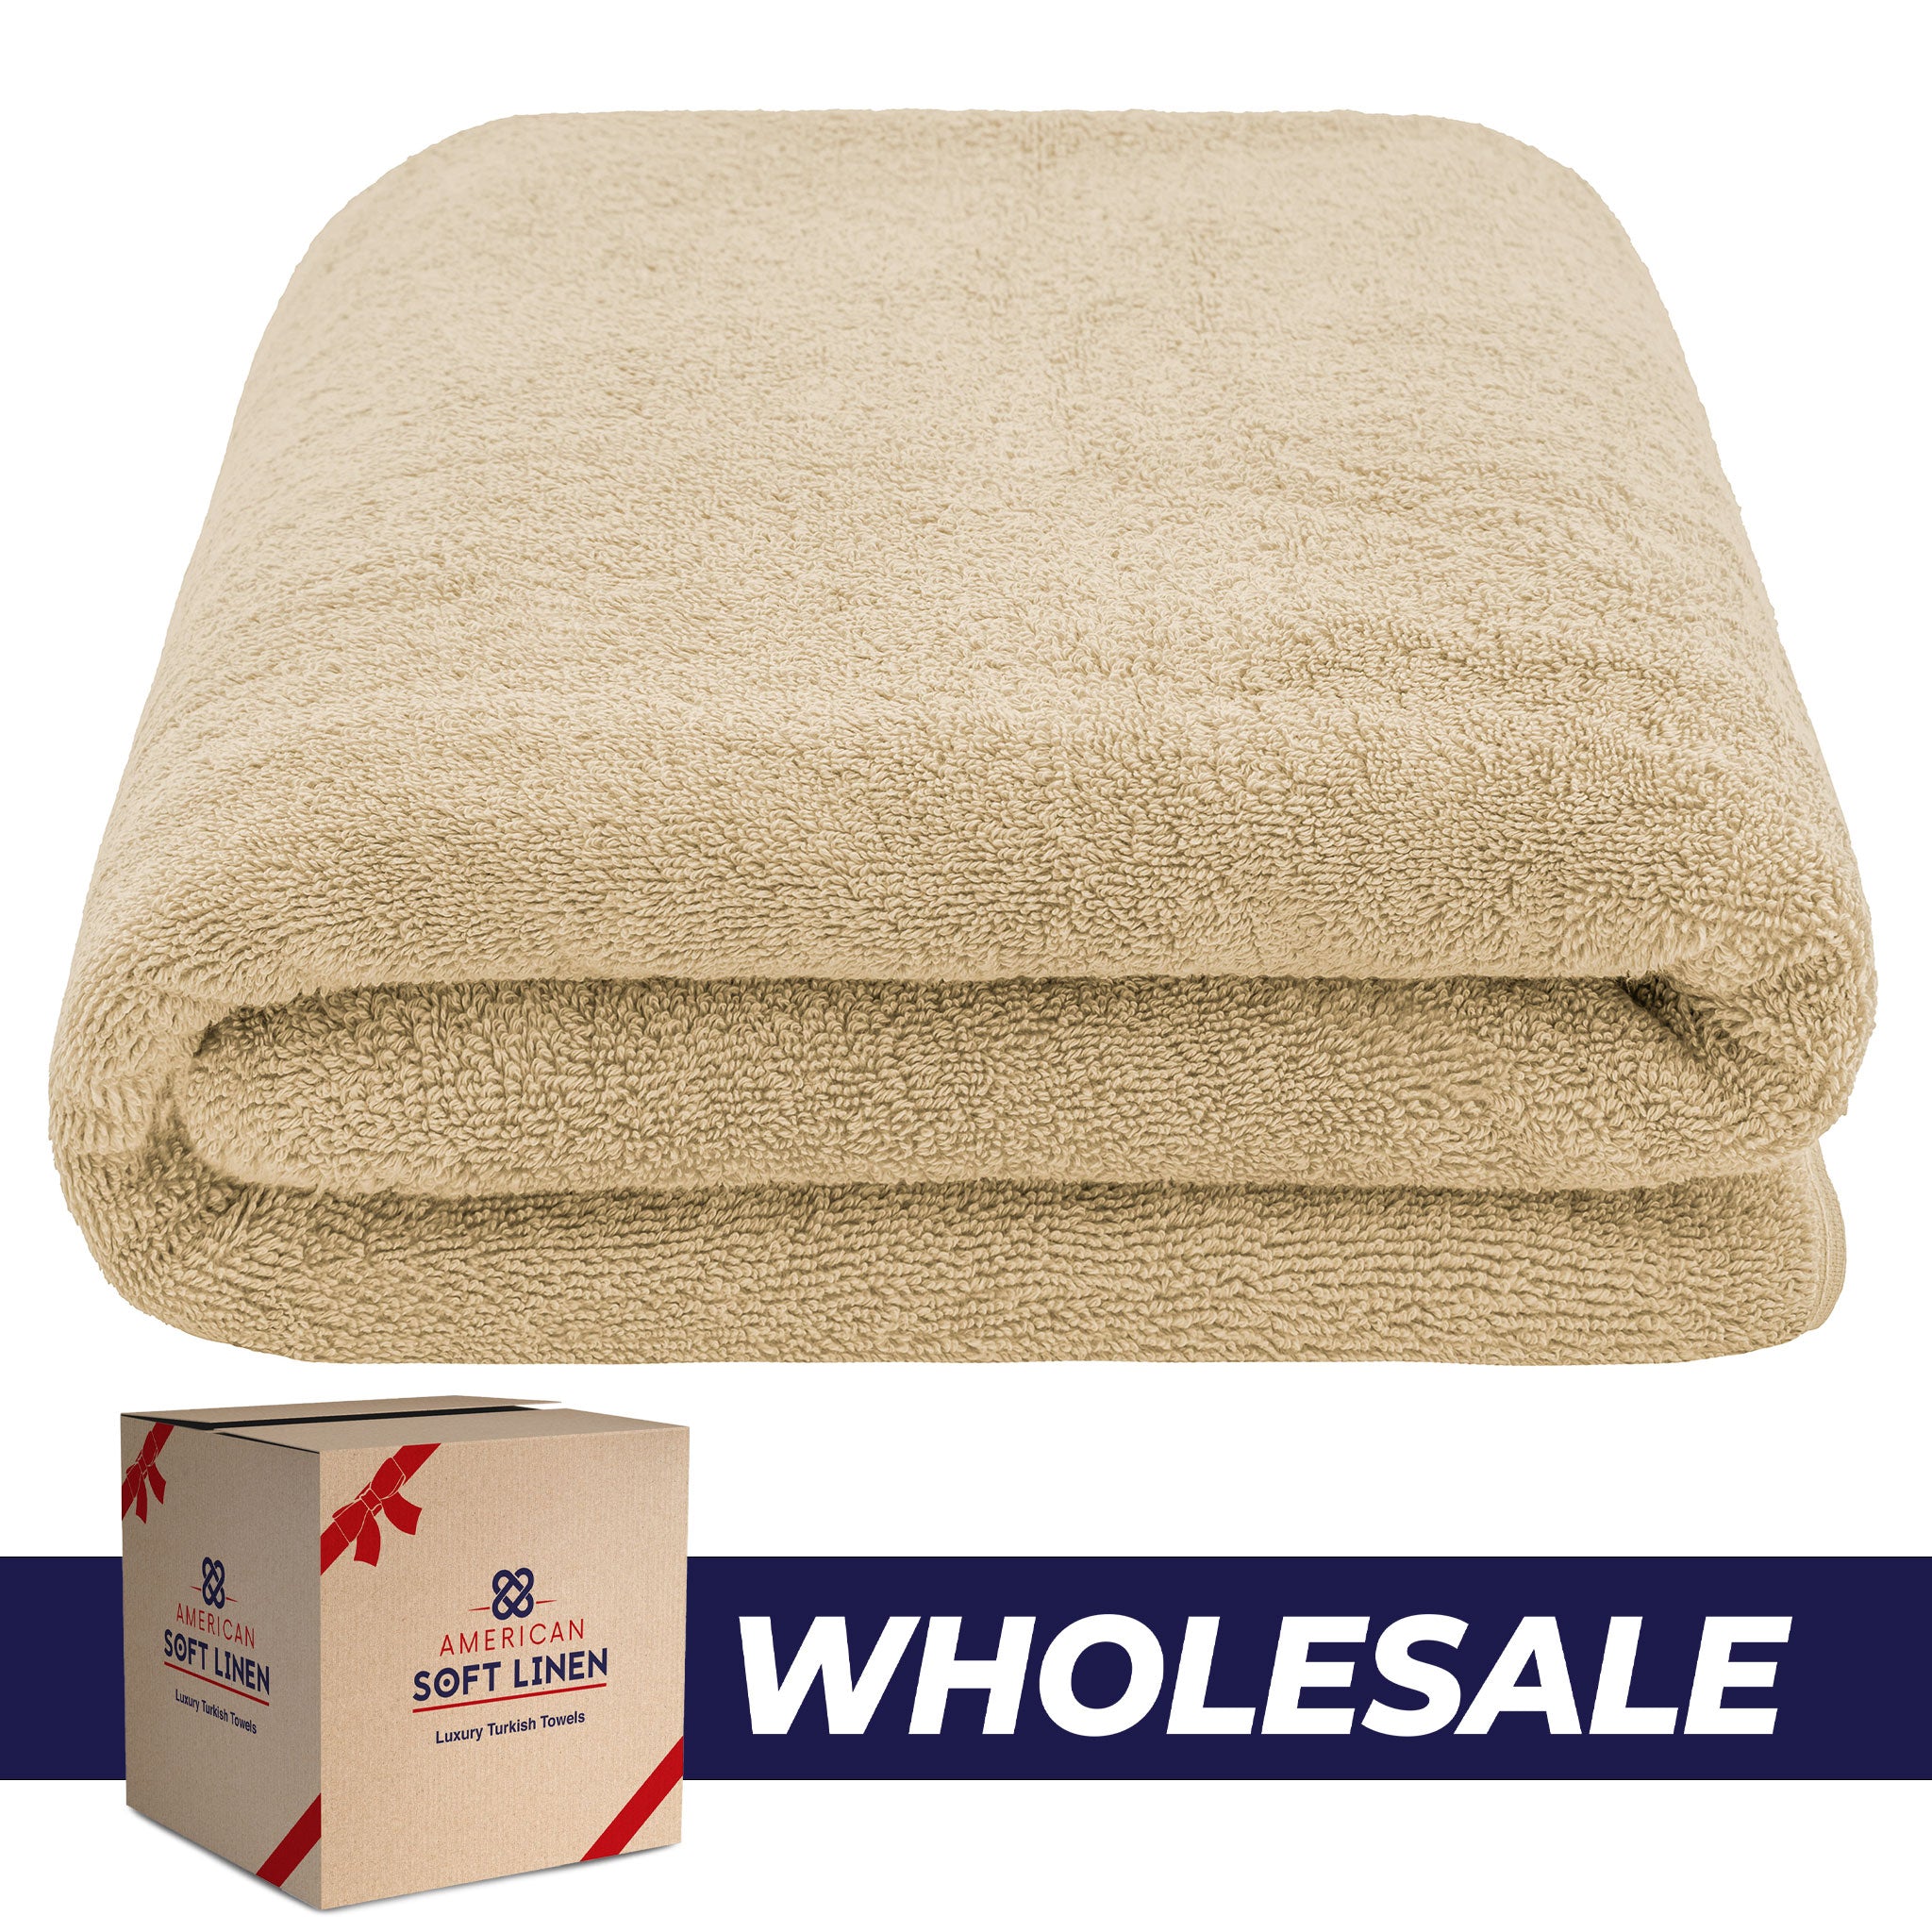 American Soft Linen - 40x80 Inch Oversized Bath Sheet Turkish Bath Towel - 12 Piece Case Pack - Sand-Taupe - 0